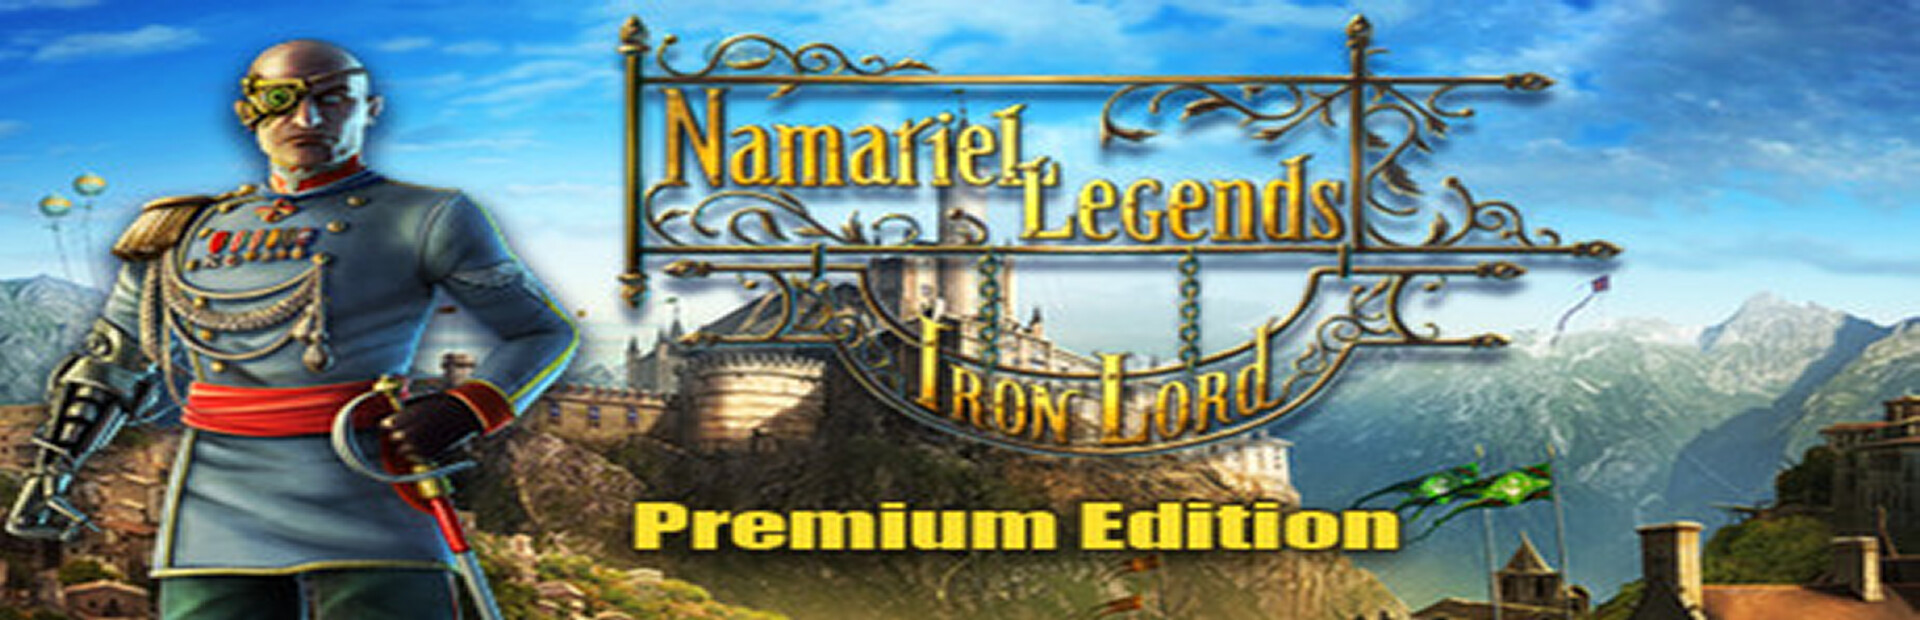 Namariel Legends: Iron Lord Premium Edition cover image